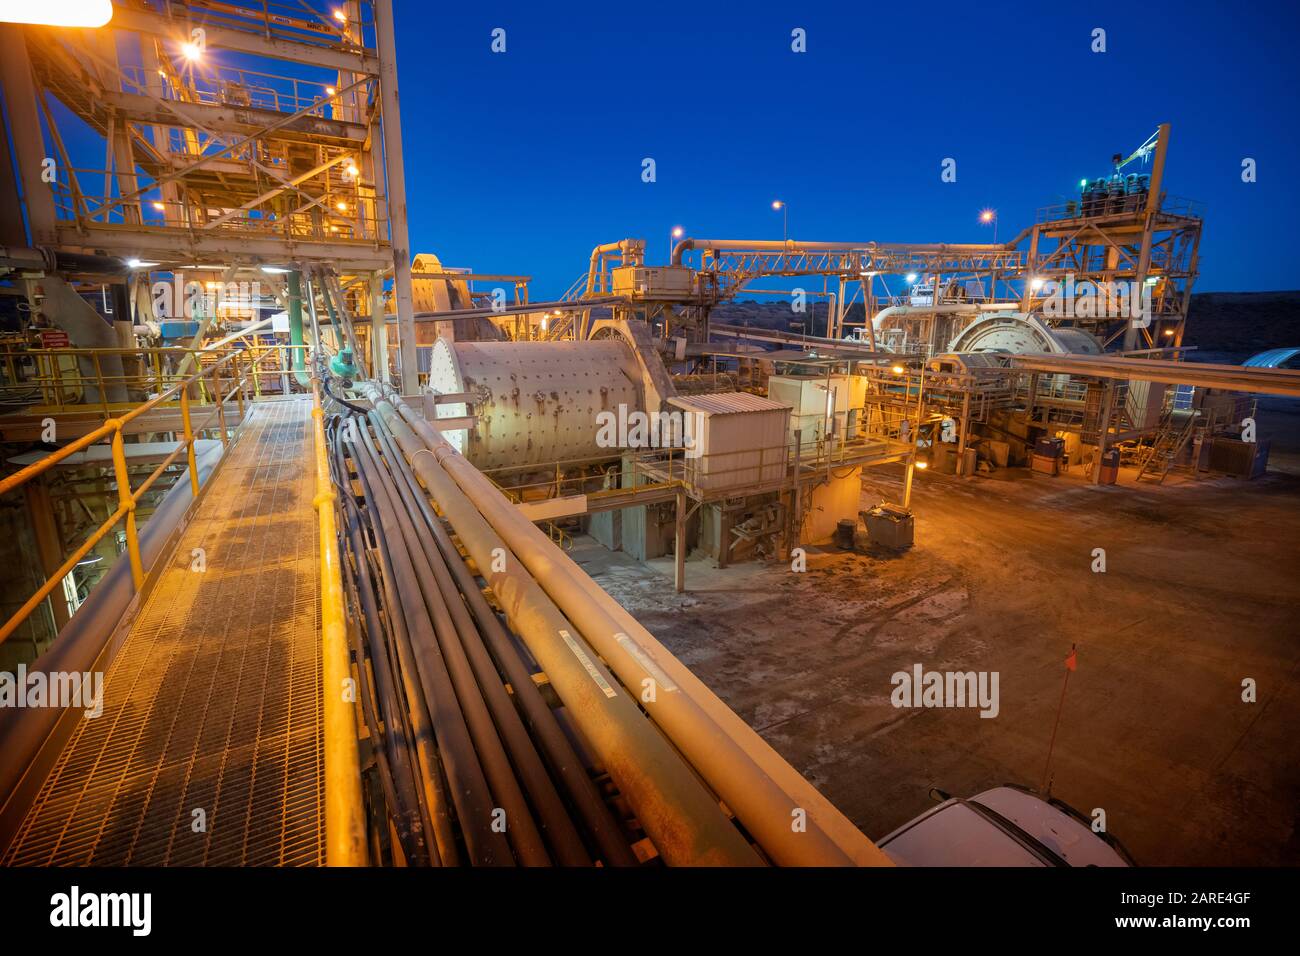 Gold processing plant at night, Western Australia Stock Photo